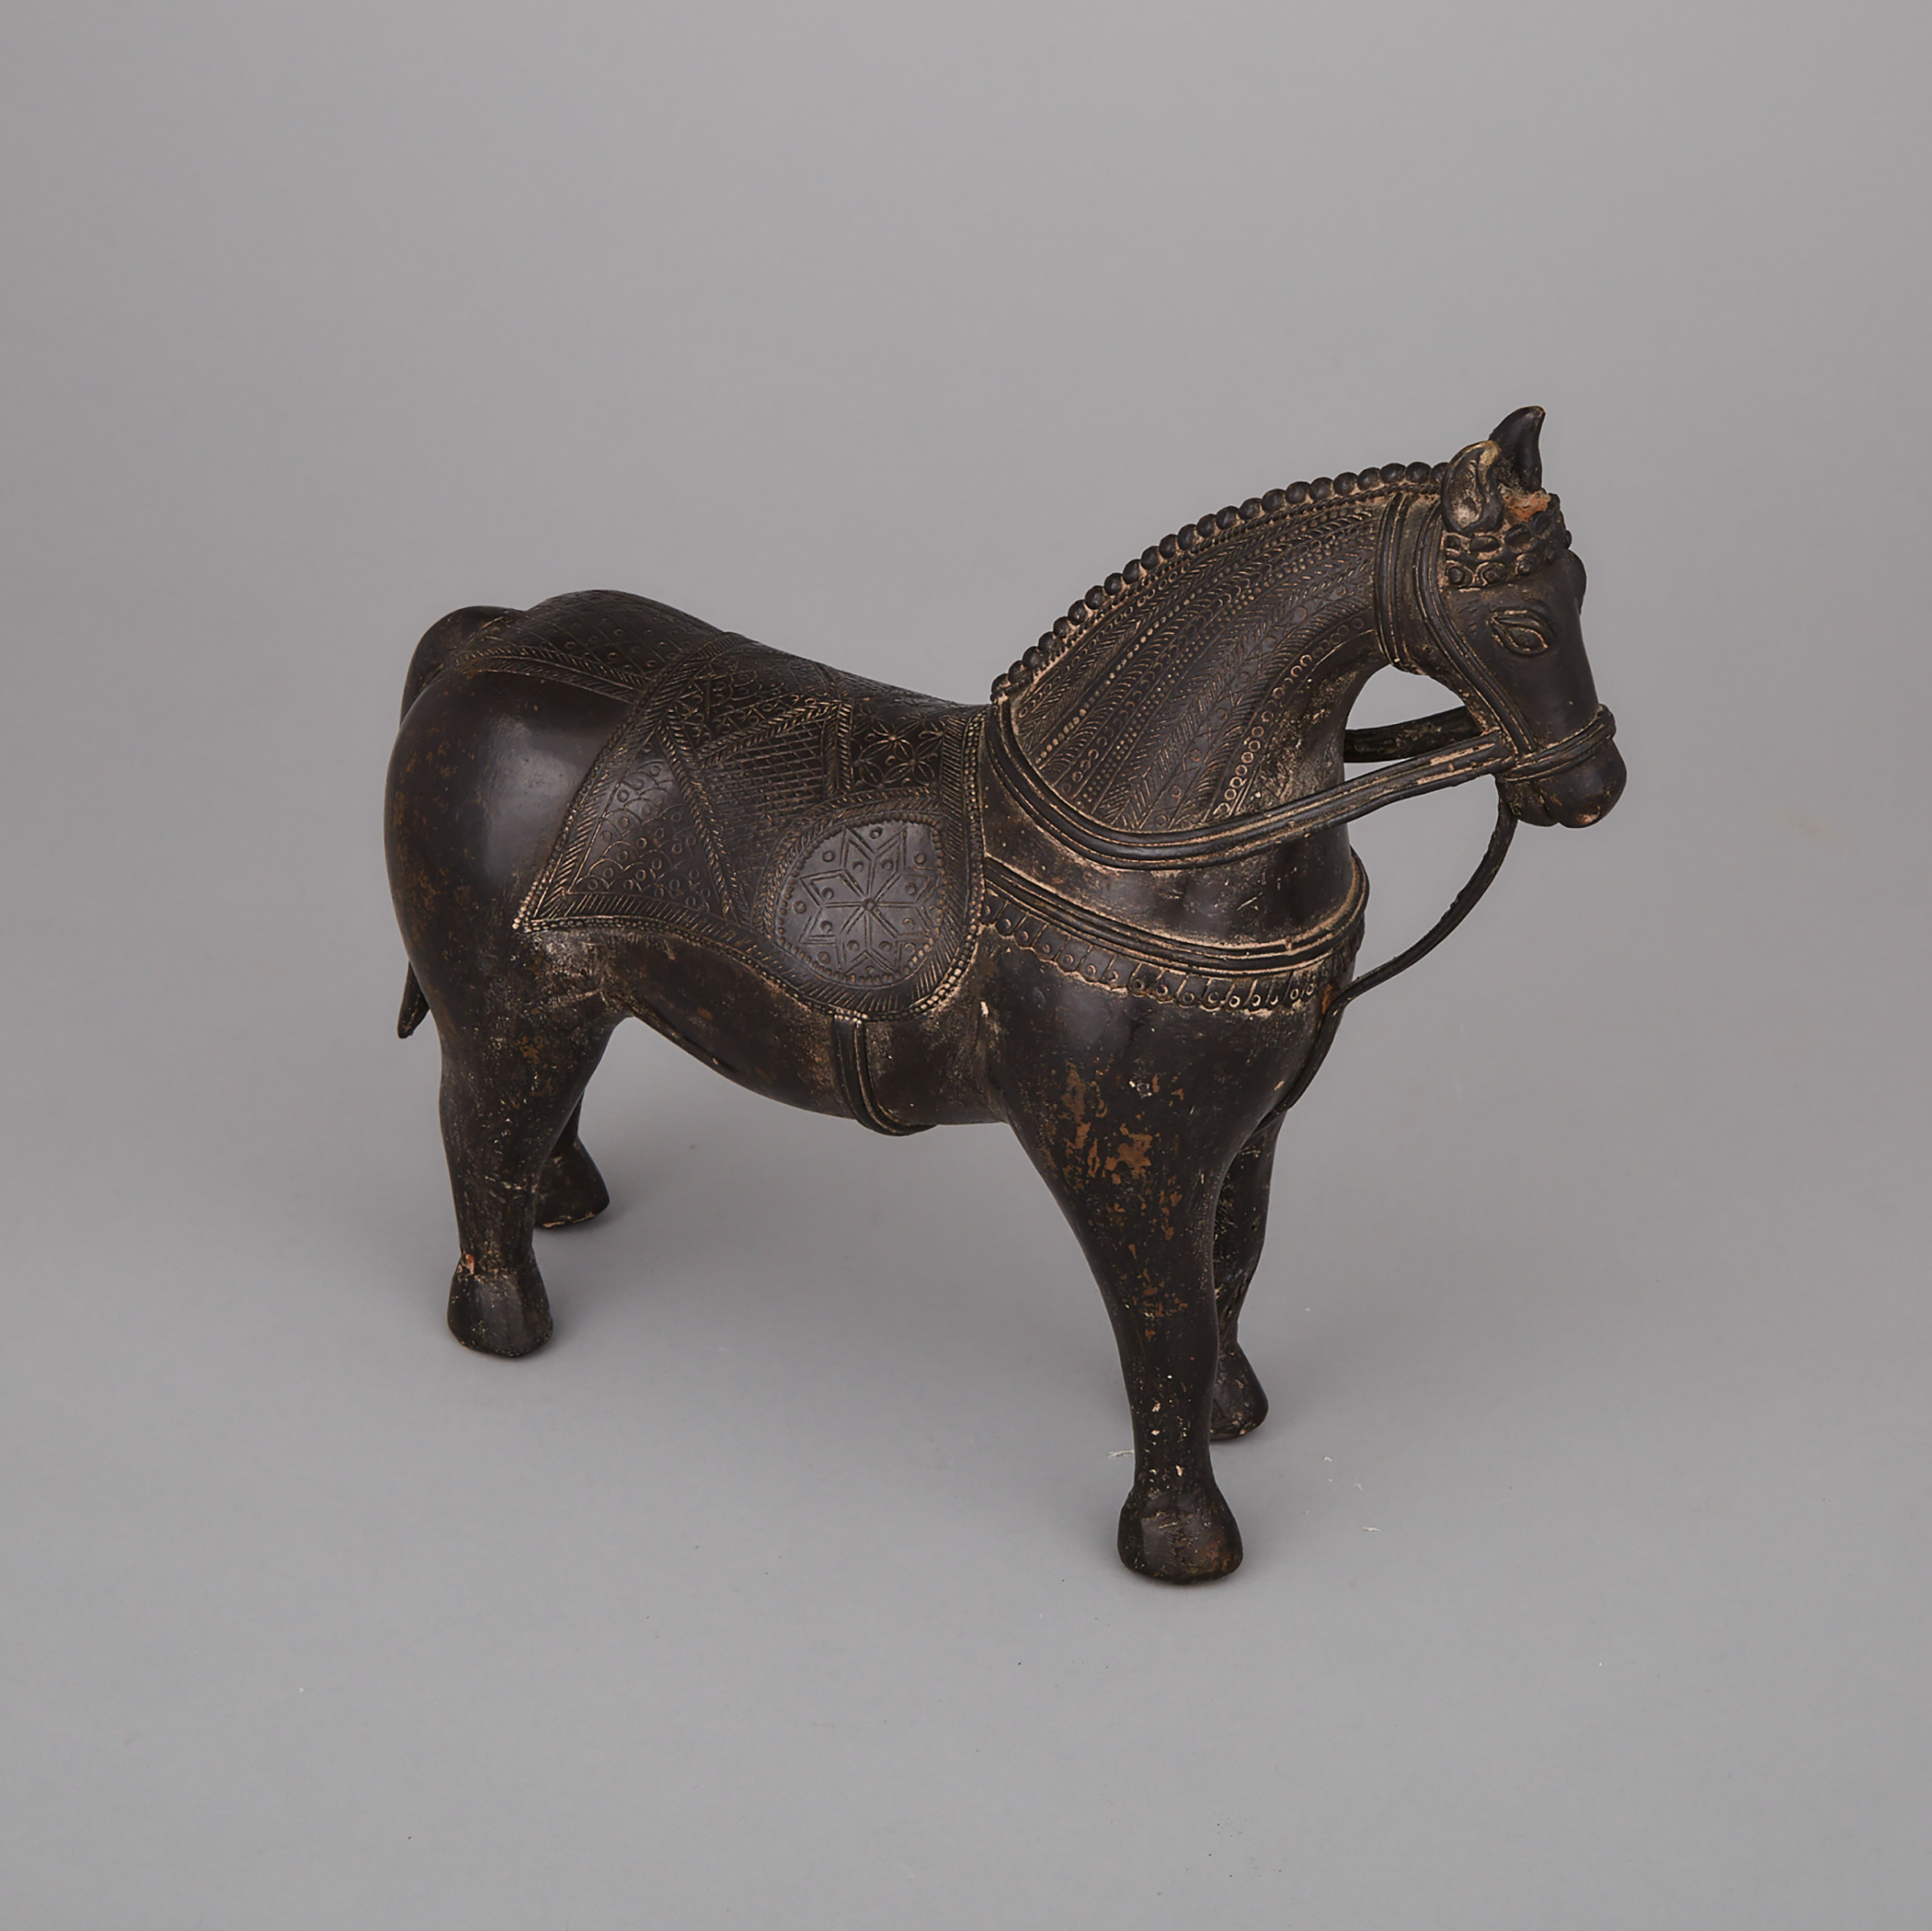 A Bronze Horse Figure, India, 19th Century